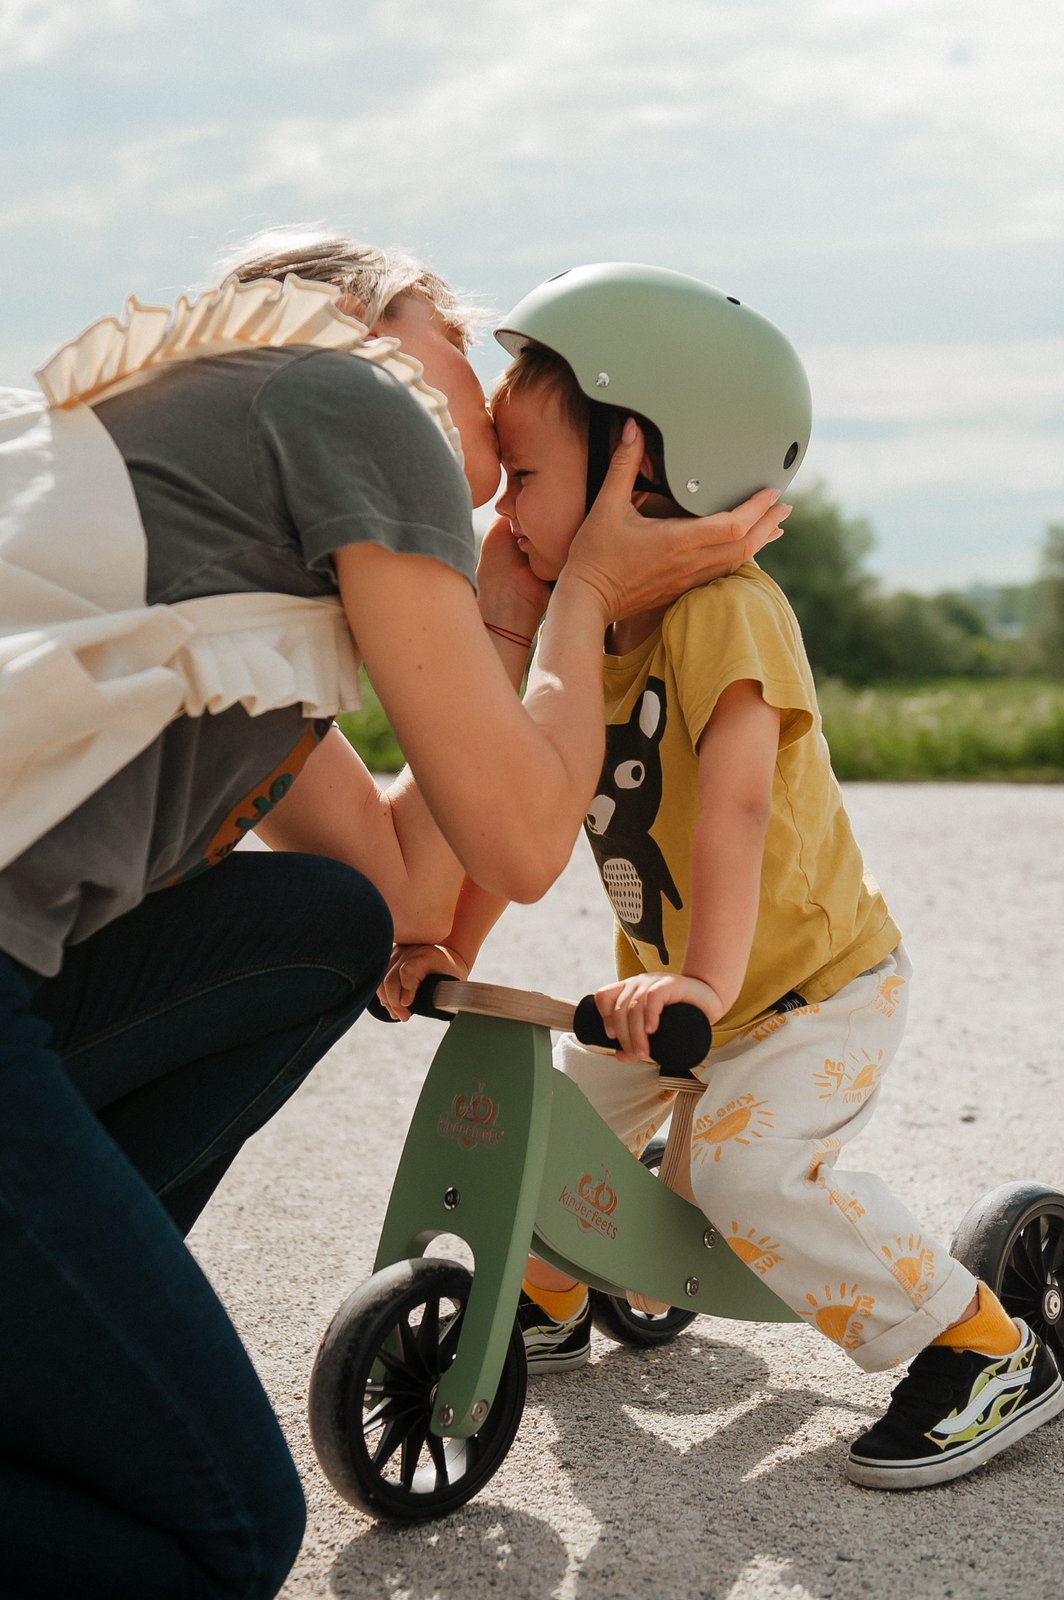 Kinderfeets Kinderfeets Tiny Tot 2-in-1 Fahrrad: Erste Schritte auf Rädern! 💕